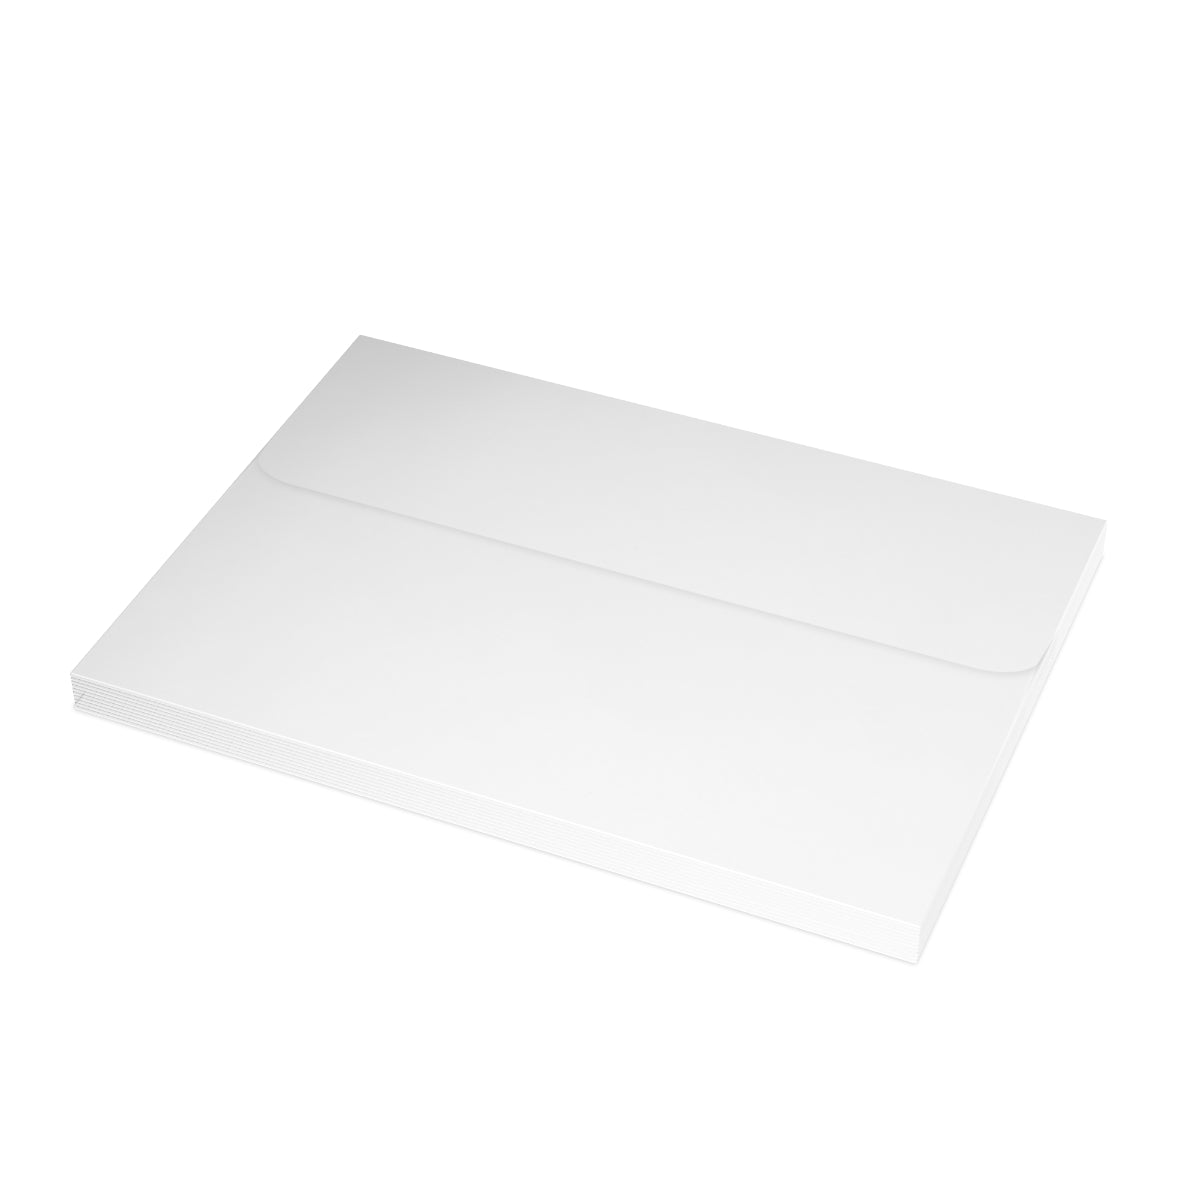 Hong Kong Folded Matte Notecards + Envelopes (10pcs)